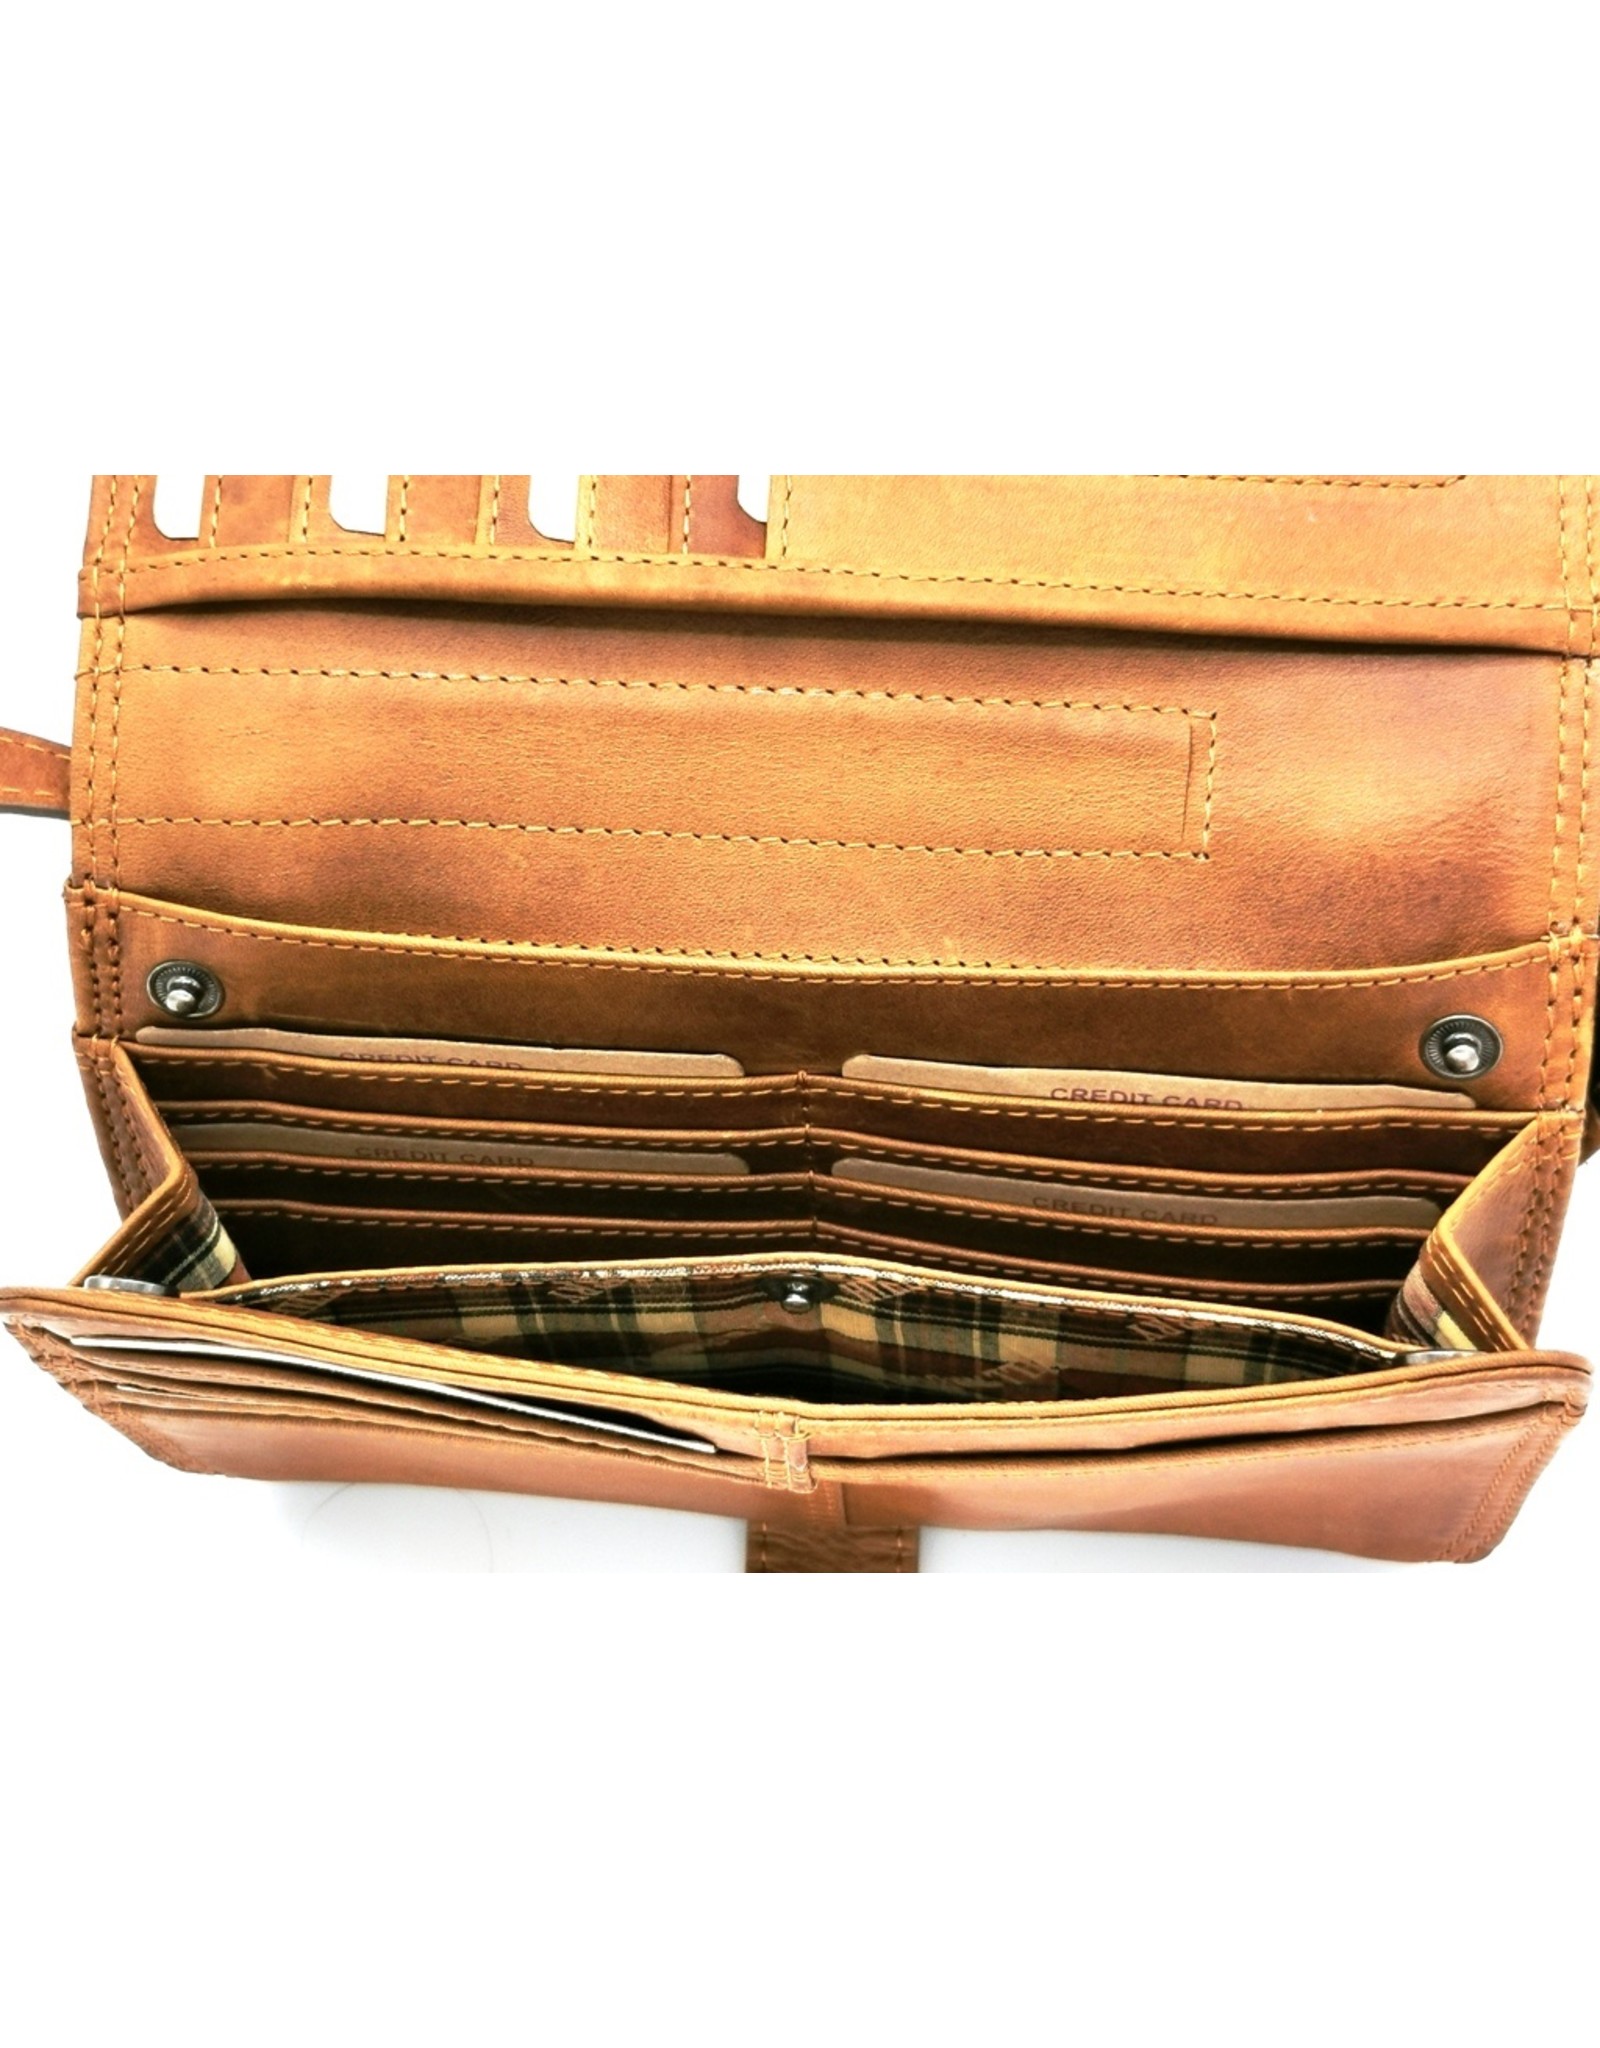 HillBurry Leather Festival bags, waist bags and belt bags - HillBurry Leather Shoulder Bag-Travel Wallet-Wristbag